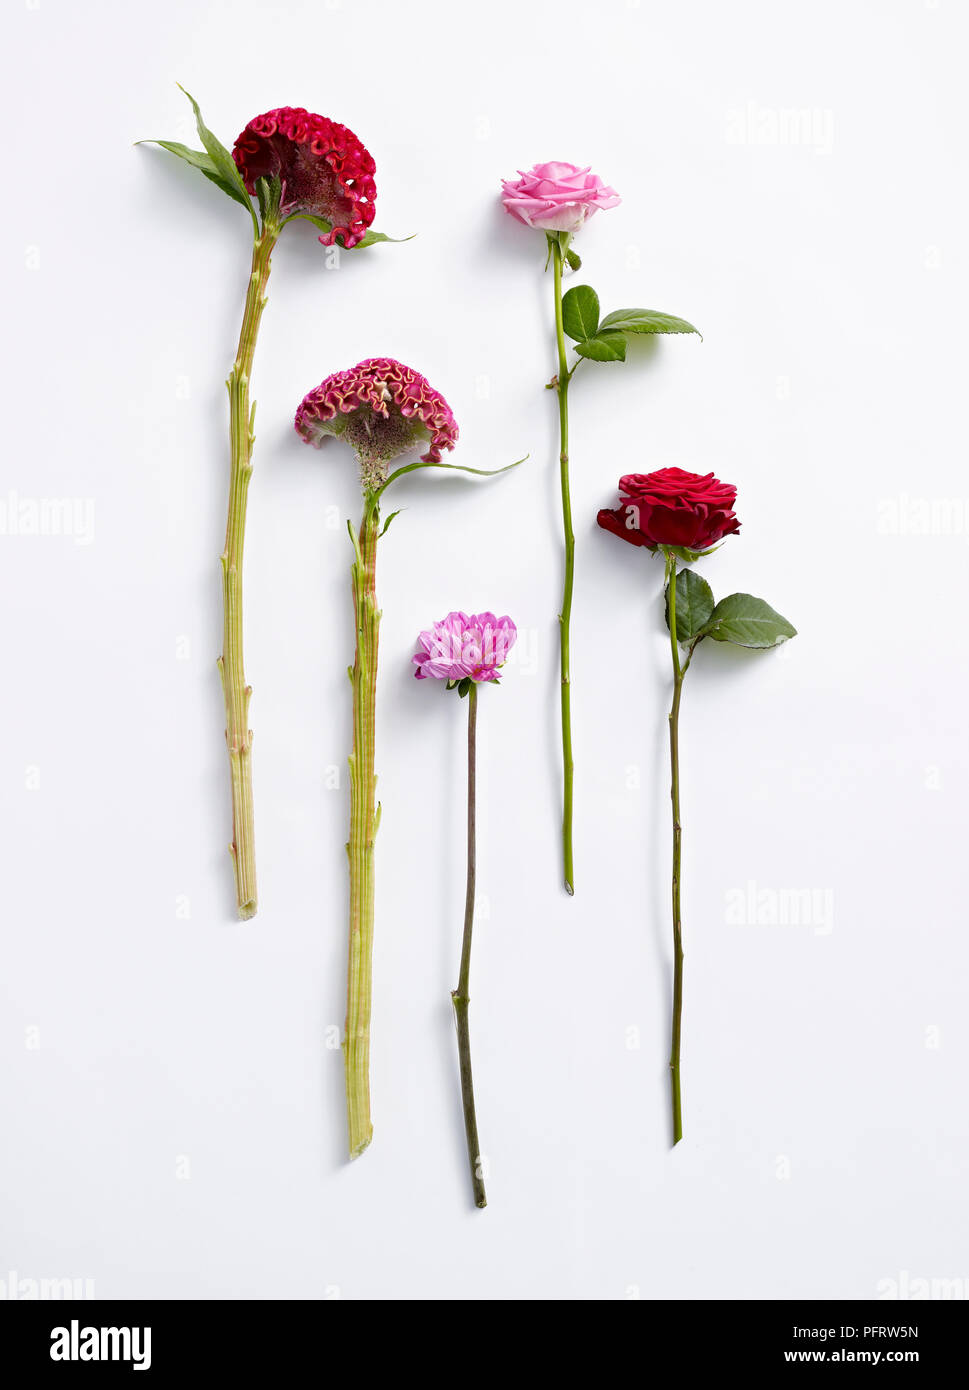 Rosa aqua rose hi-res stock photography and images - Alamy